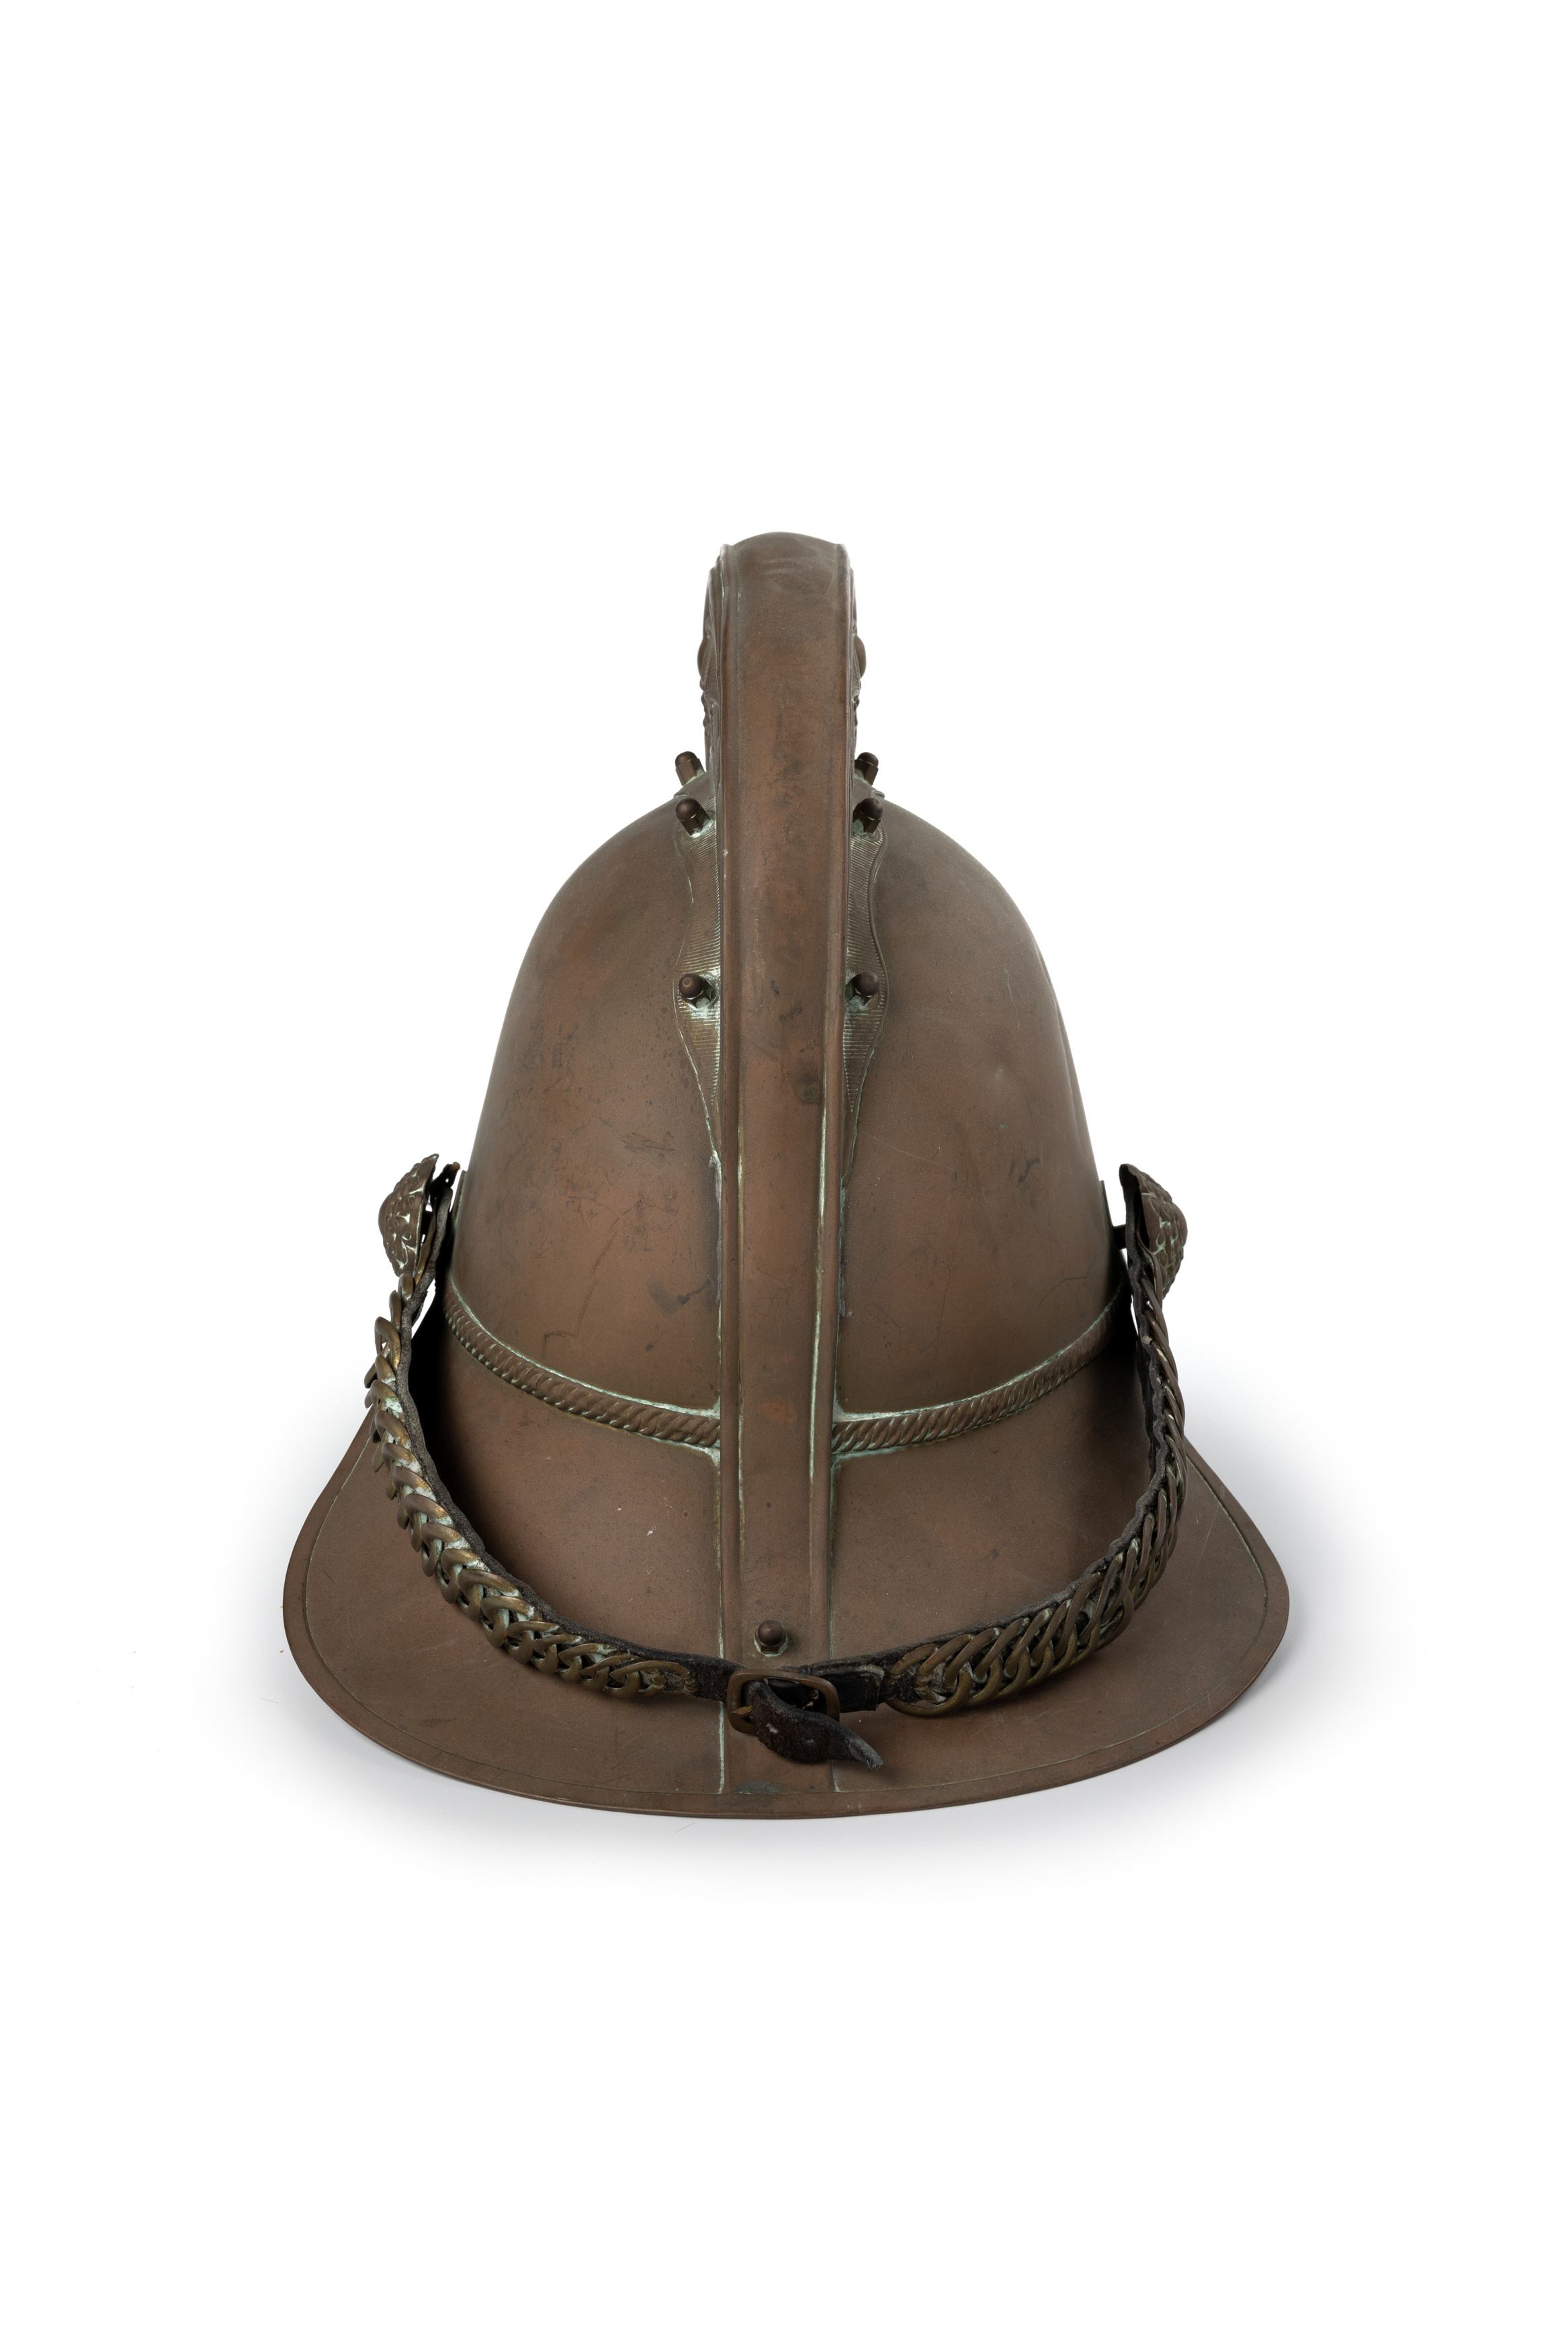 NSWFB fireman's helmet, 1940-64